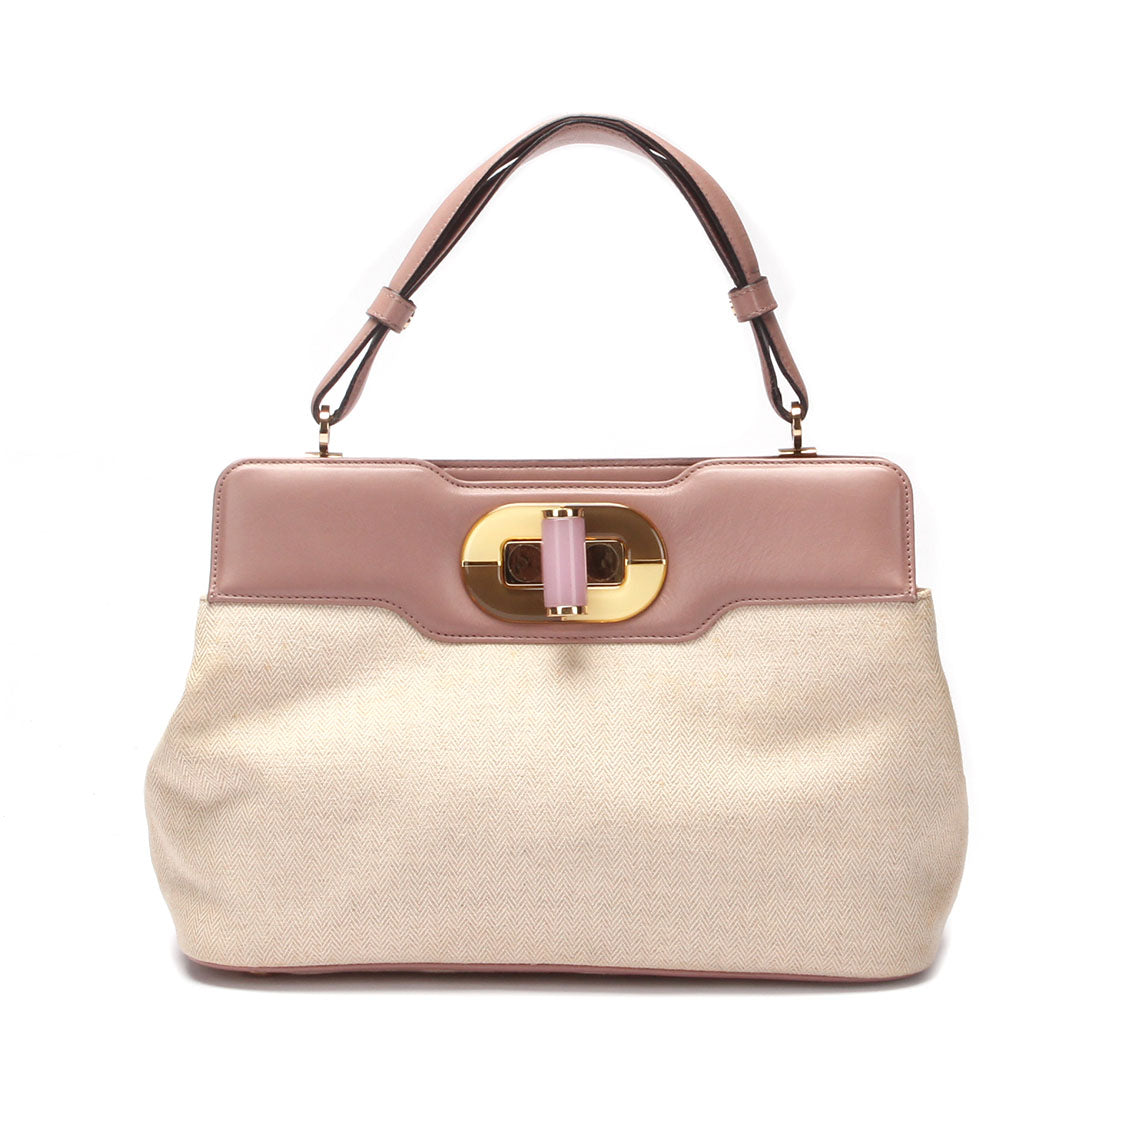 Bvlgari Canvas & Leather Isabella Rossellini Bag Canvas Handbag in Fair condition